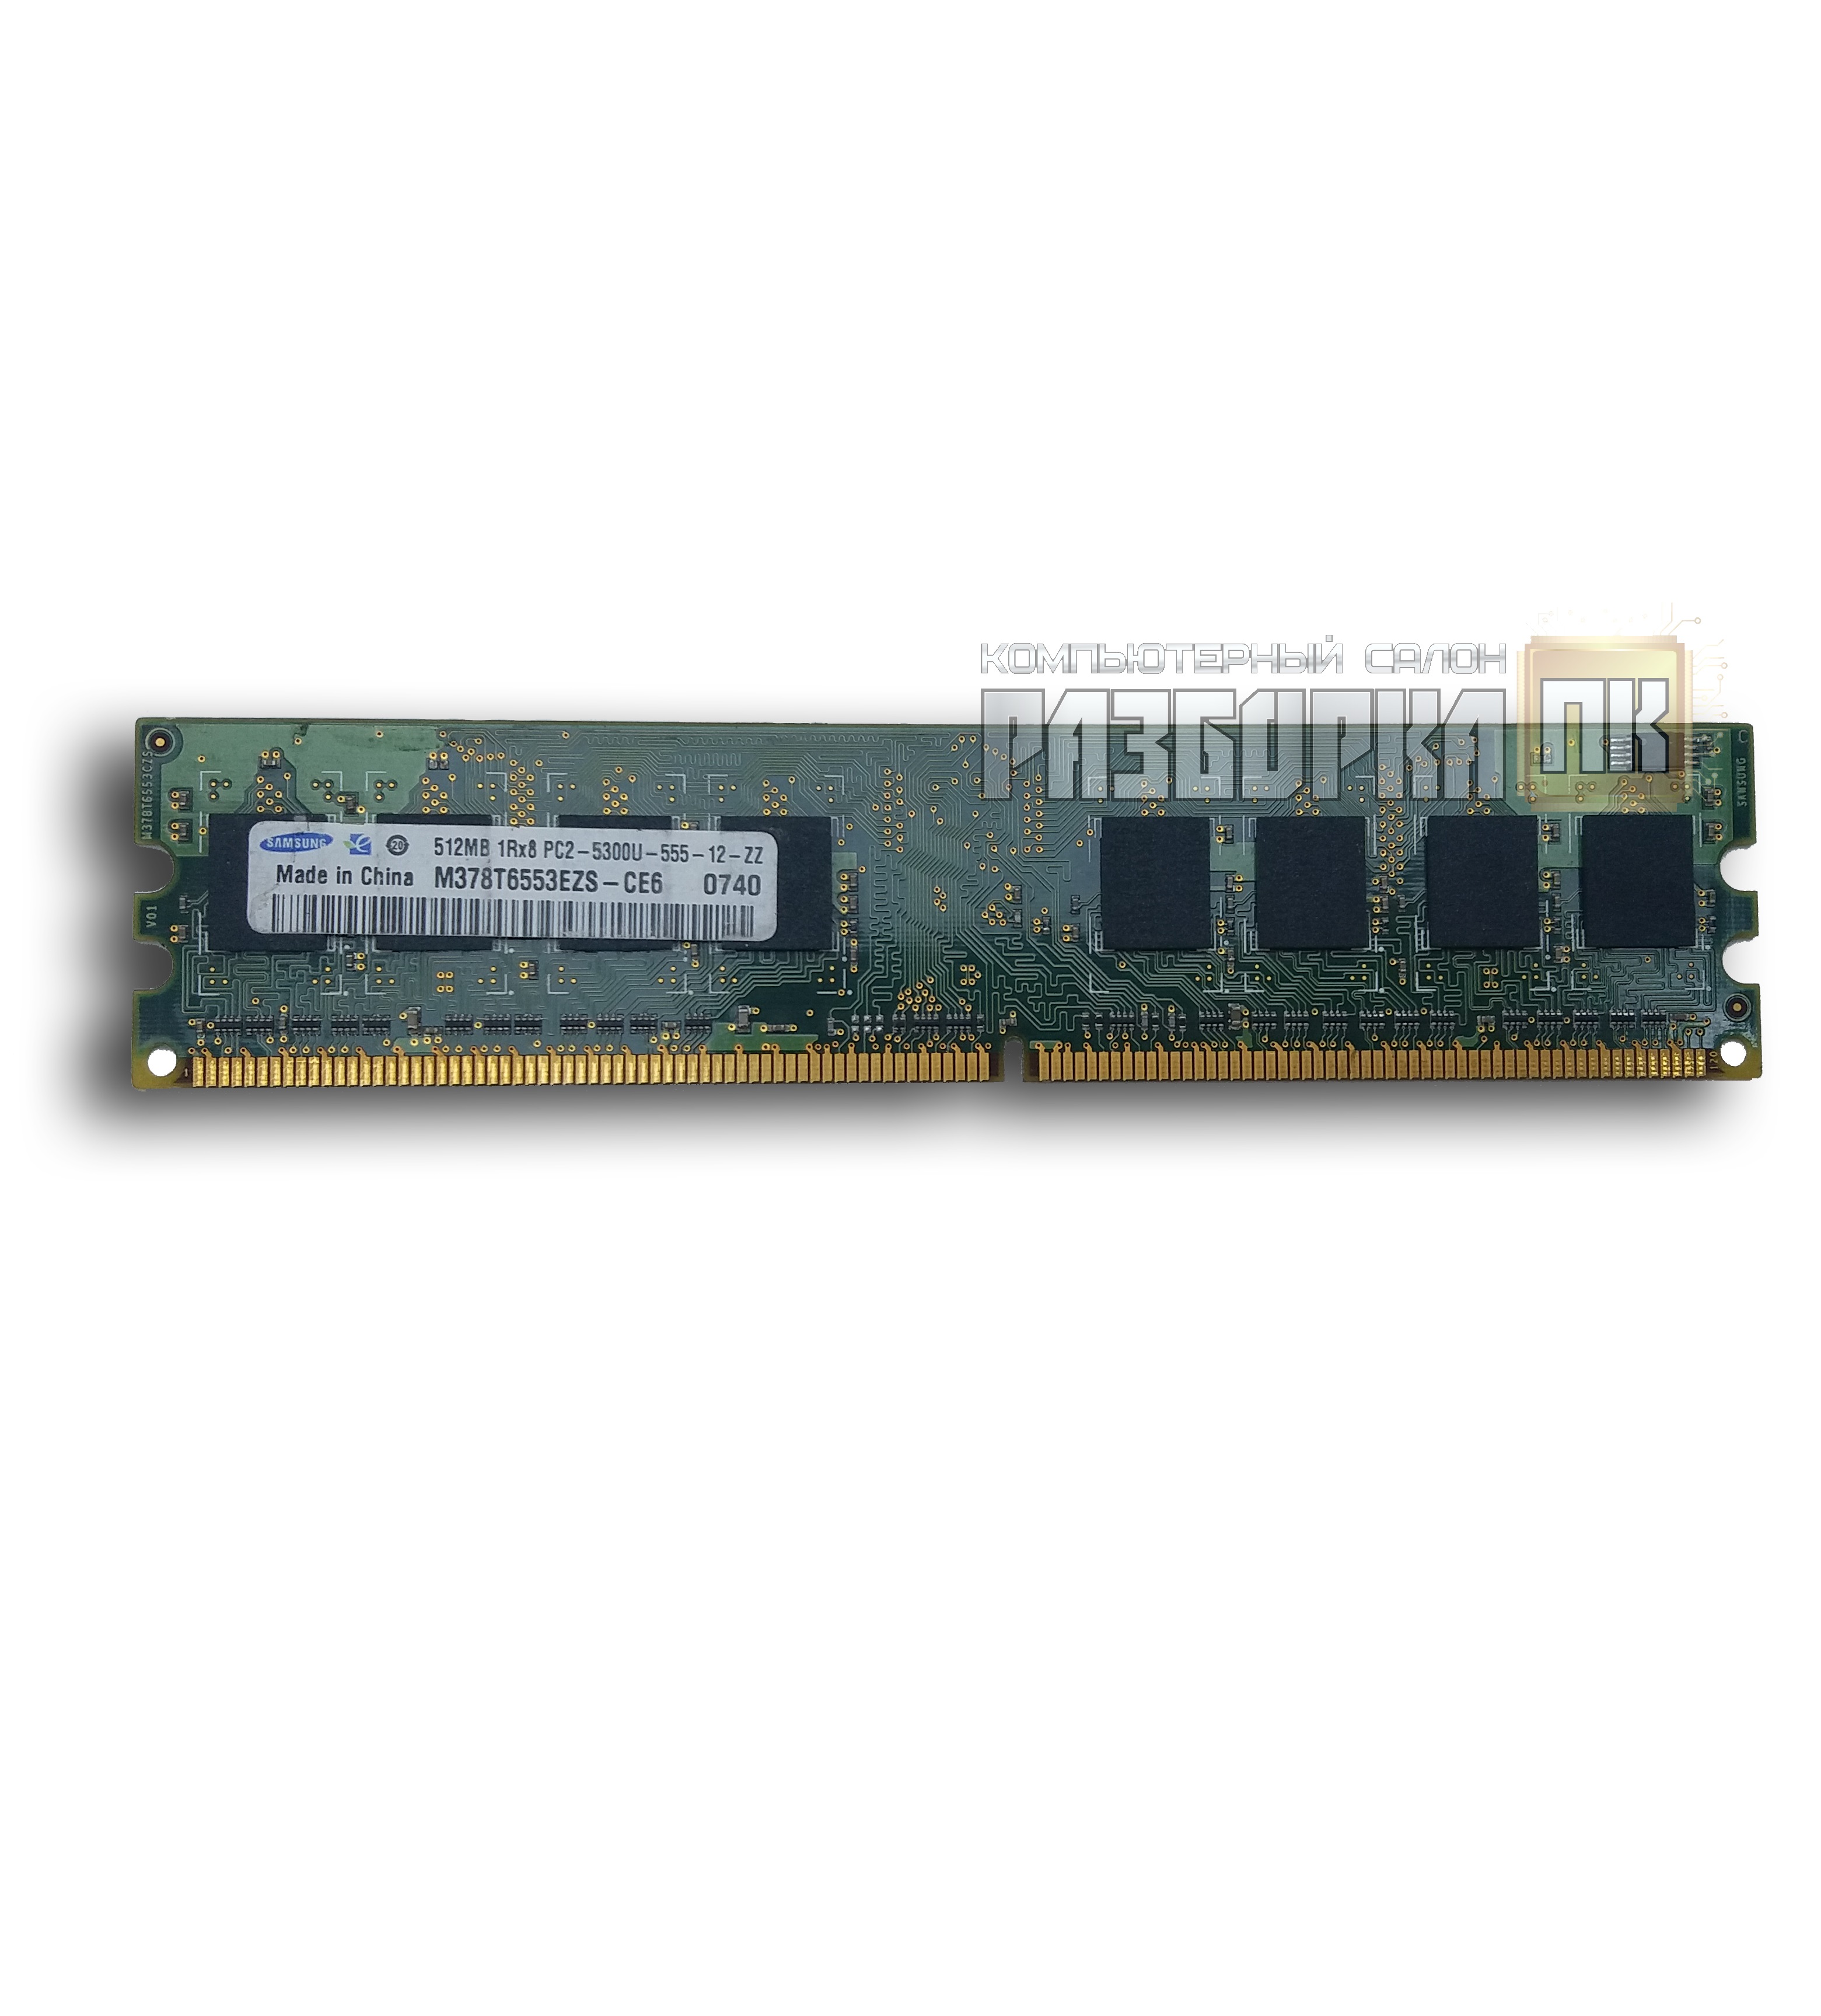 Оперативная память DIMM DDR-II 512MB PC2 5300 667Mhz